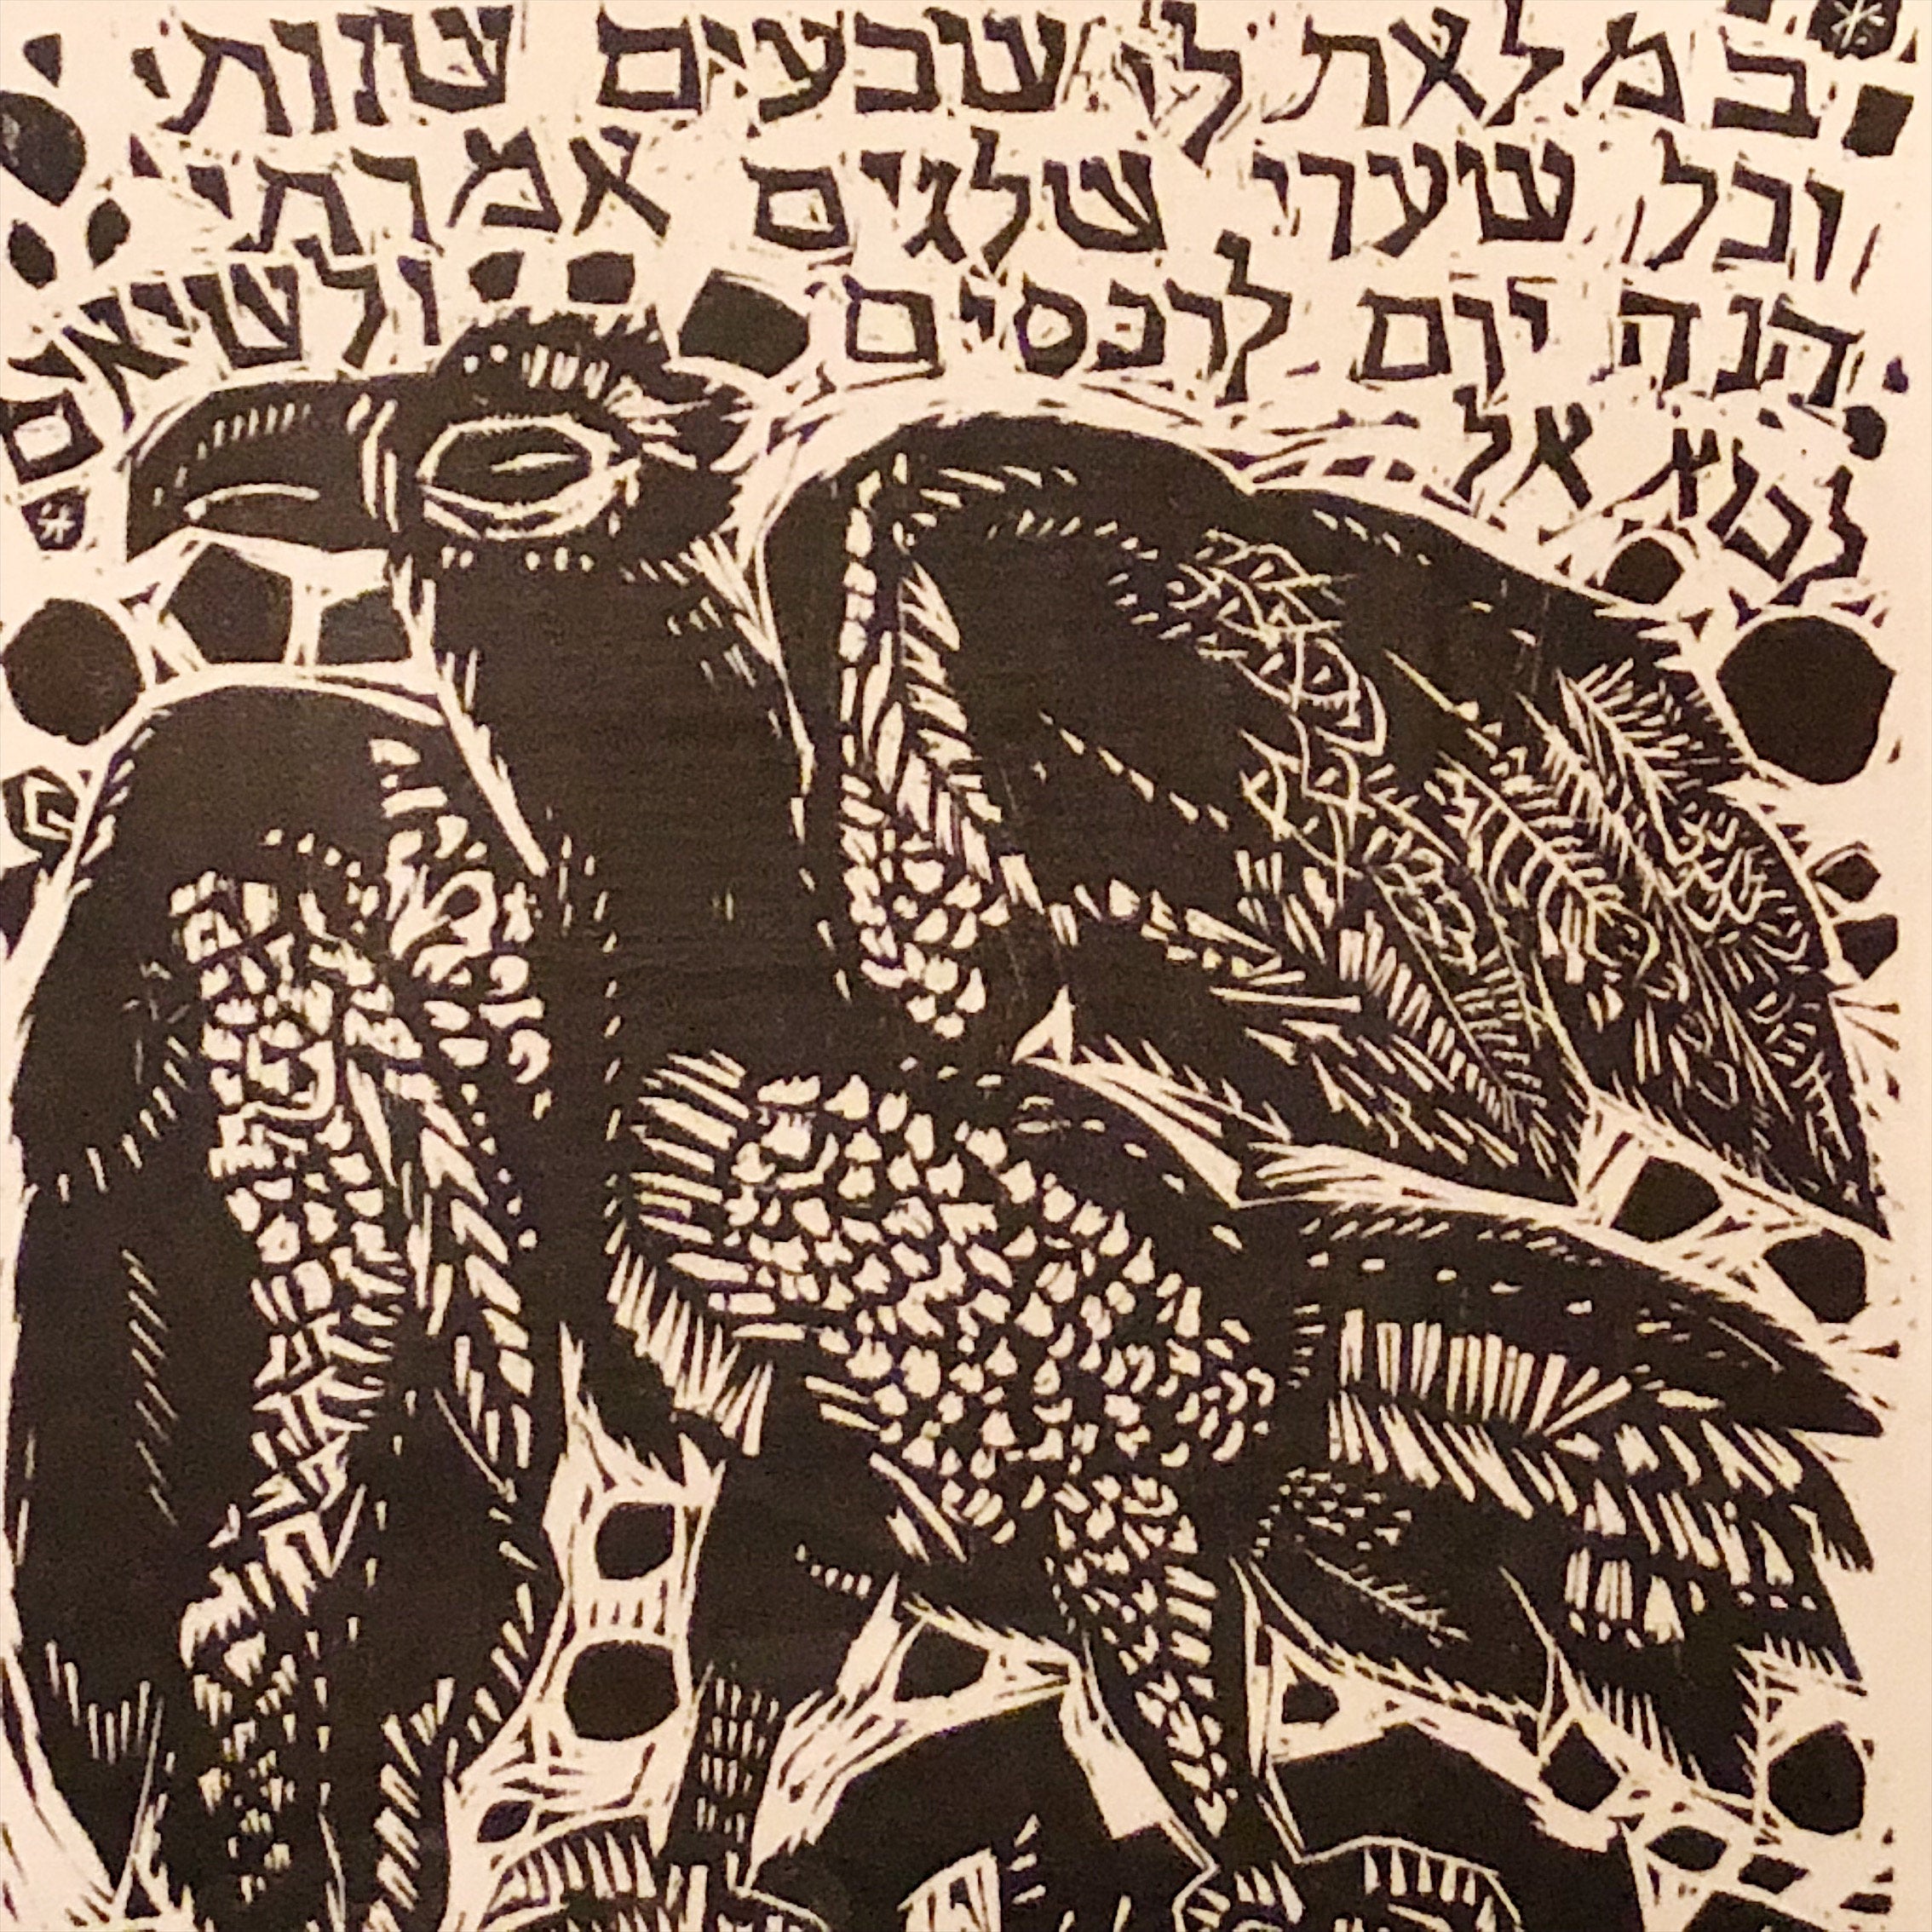 Nikos Stavroulakis Woodcut with Ayin Hillel Inscription - To The Eagle - 1970s- Rare Judaica Art - Jewish Art - Nicholas Stavroulakis Print